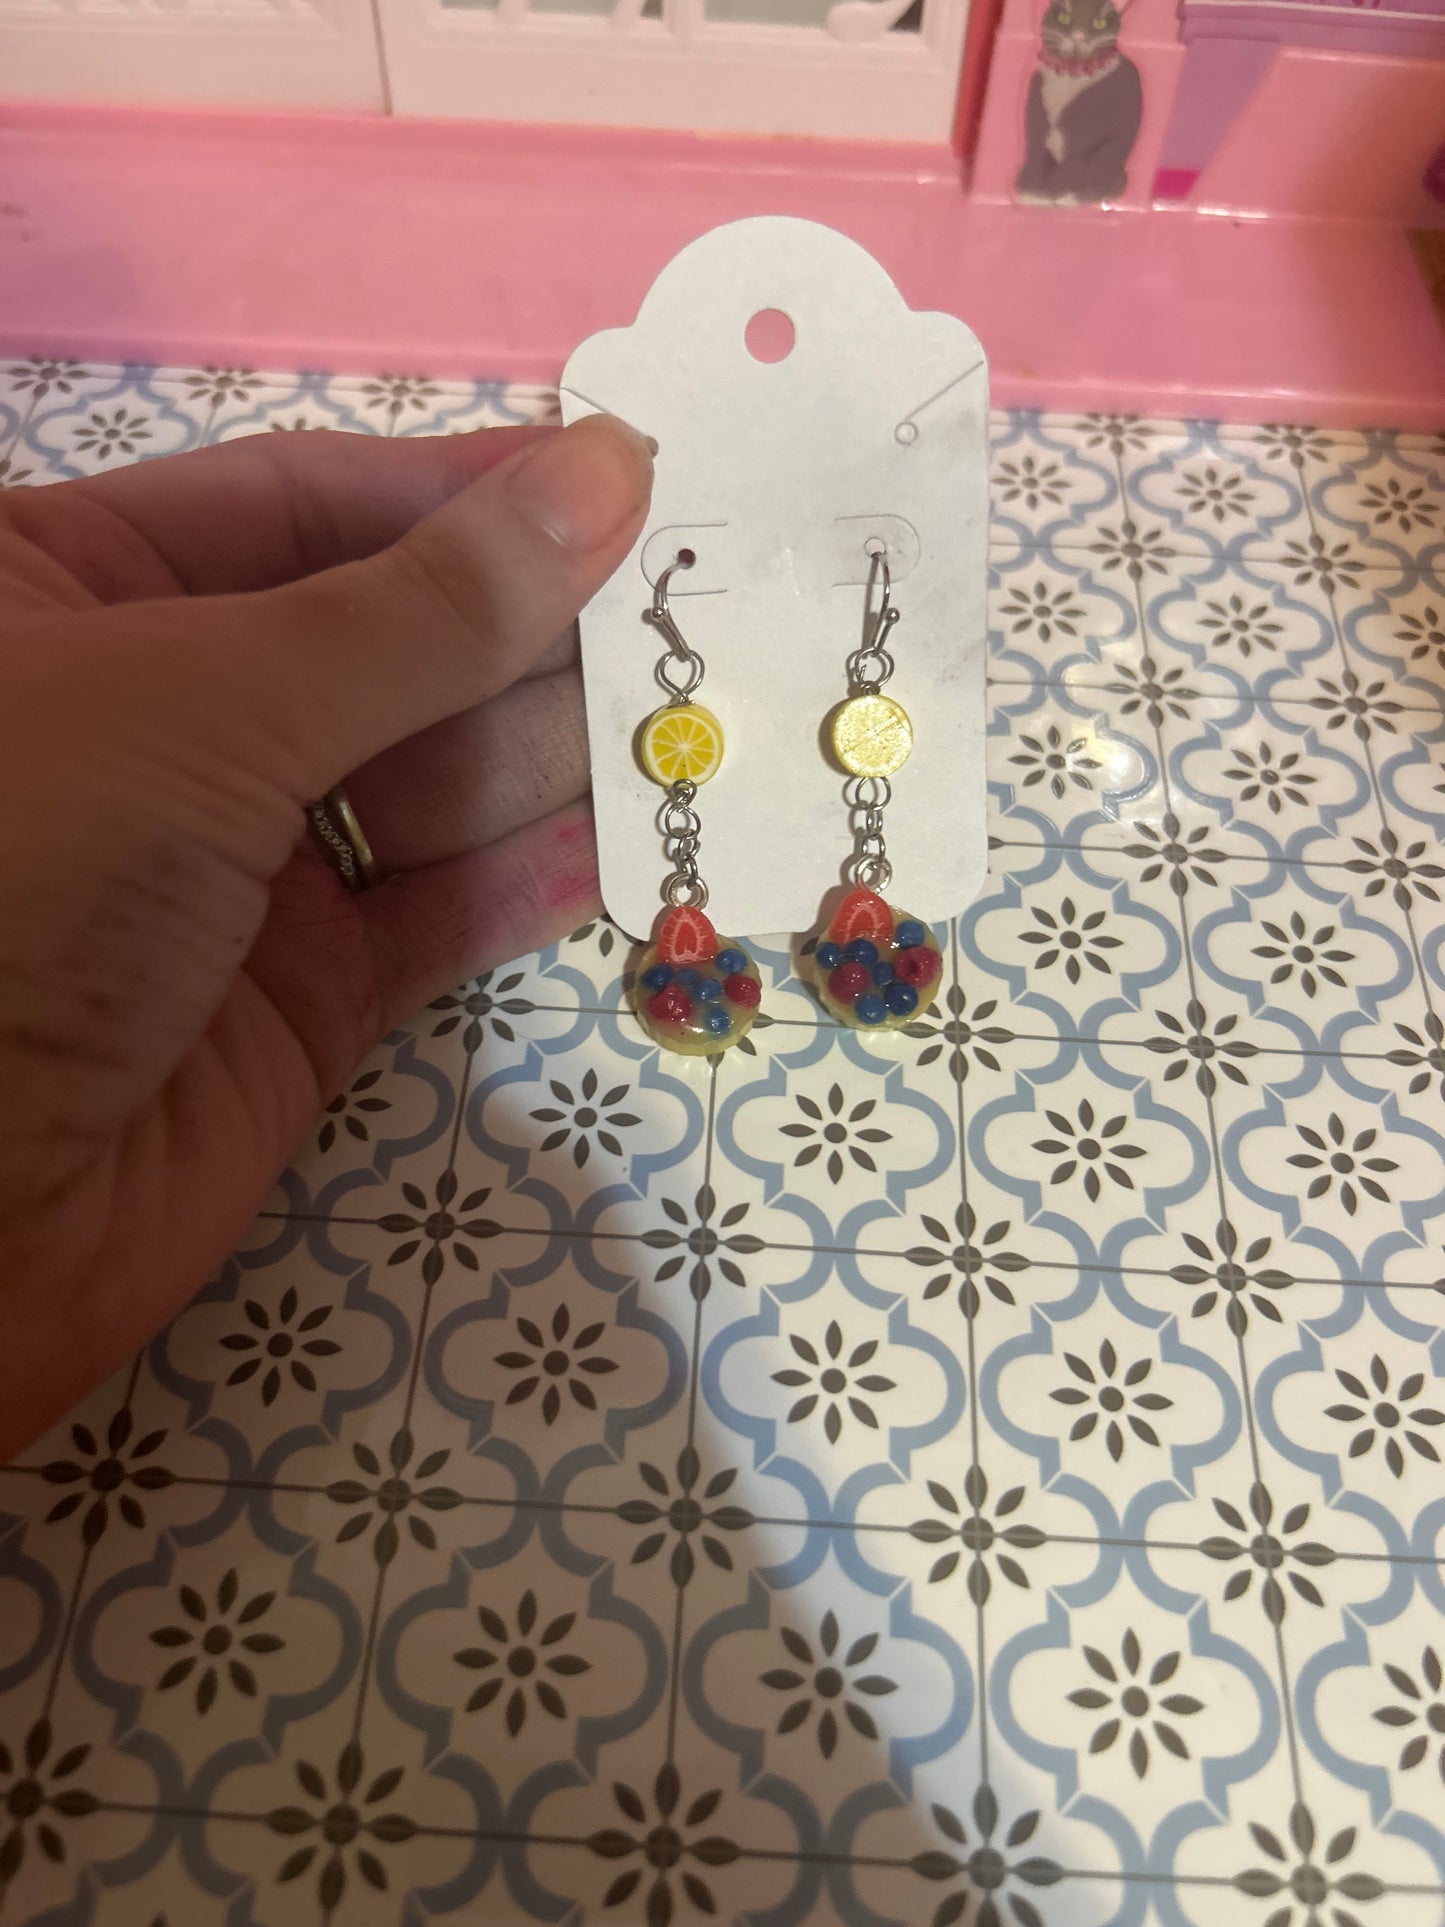 Mini fruit Tarts Earrings with lemon